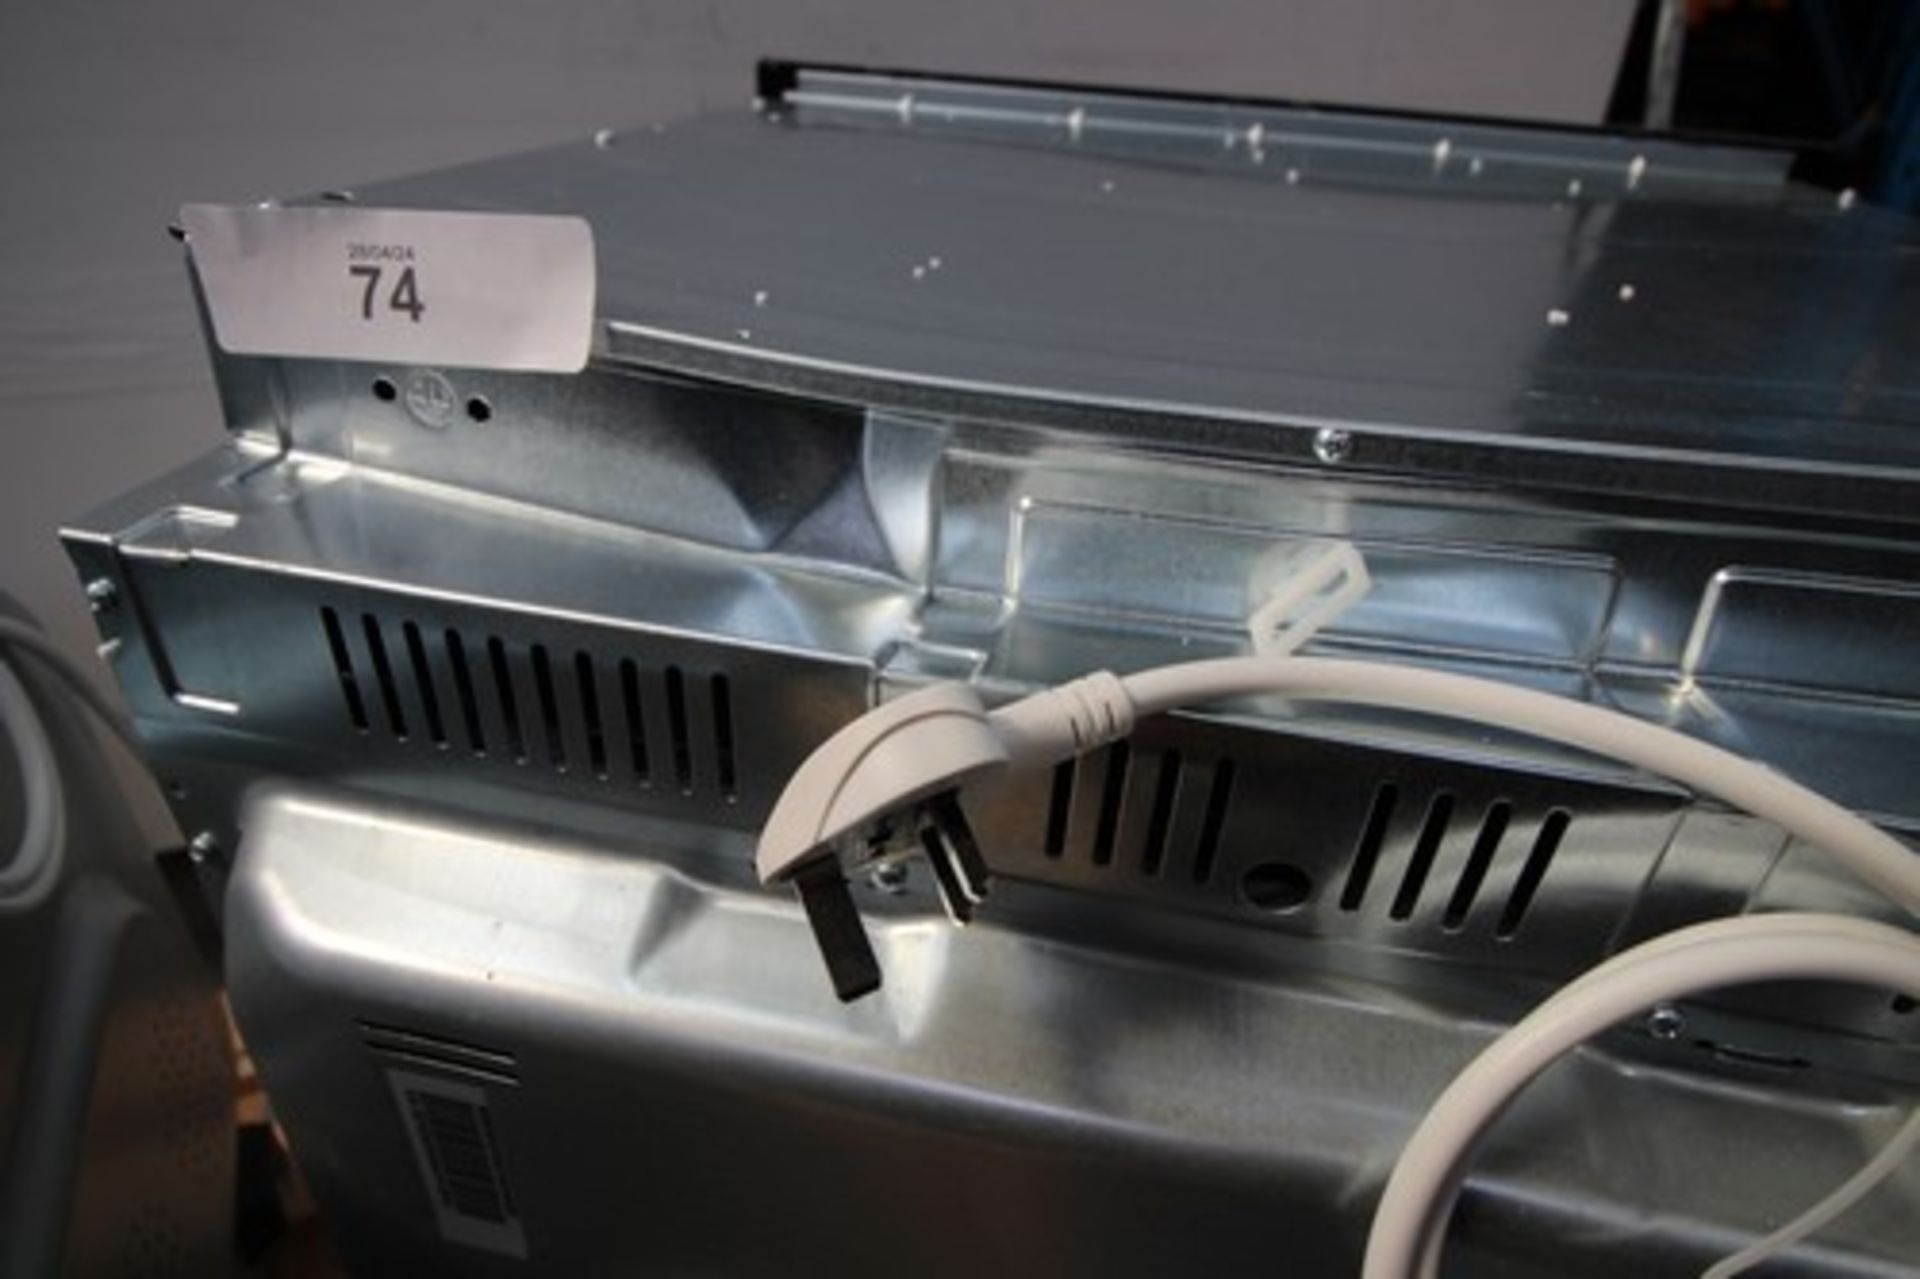 1 x Culina 65L single oven, black, model No: UB0652BK, dent on centre back panel - new (ES9) - Image 3 of 4